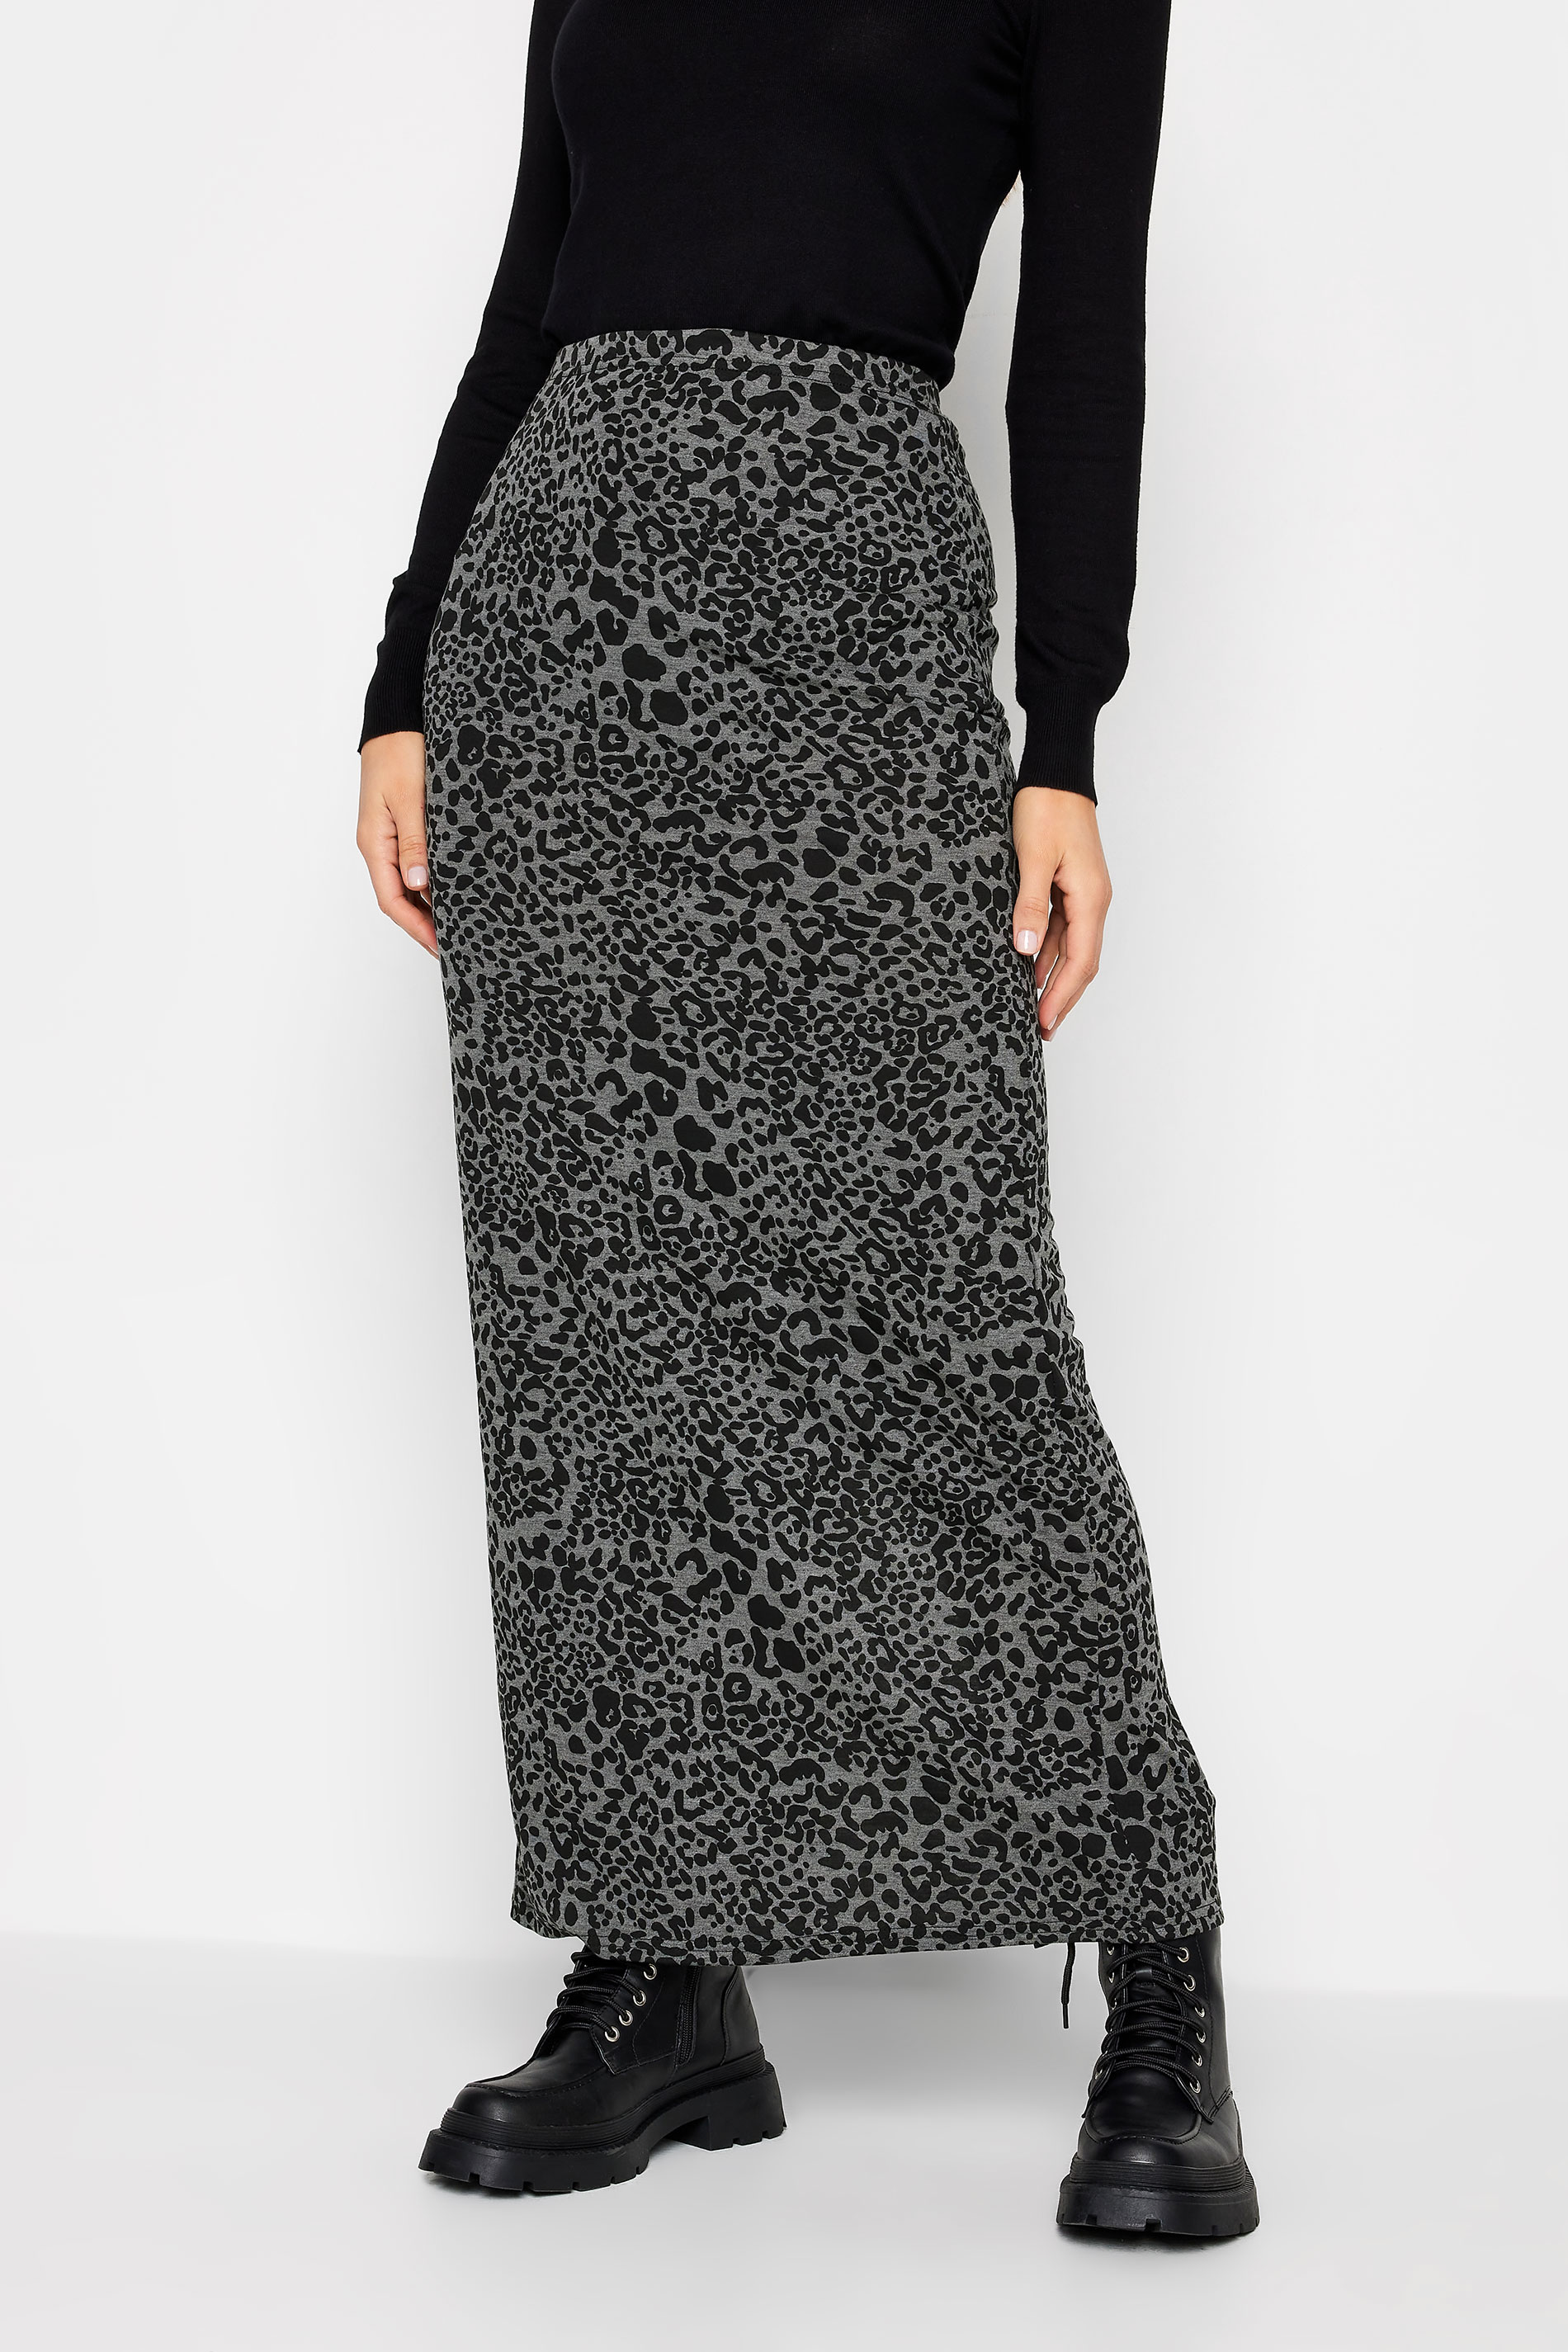 LTS Tall Grey Leopard Print Maxi Skirt | Long Tall Sally 1